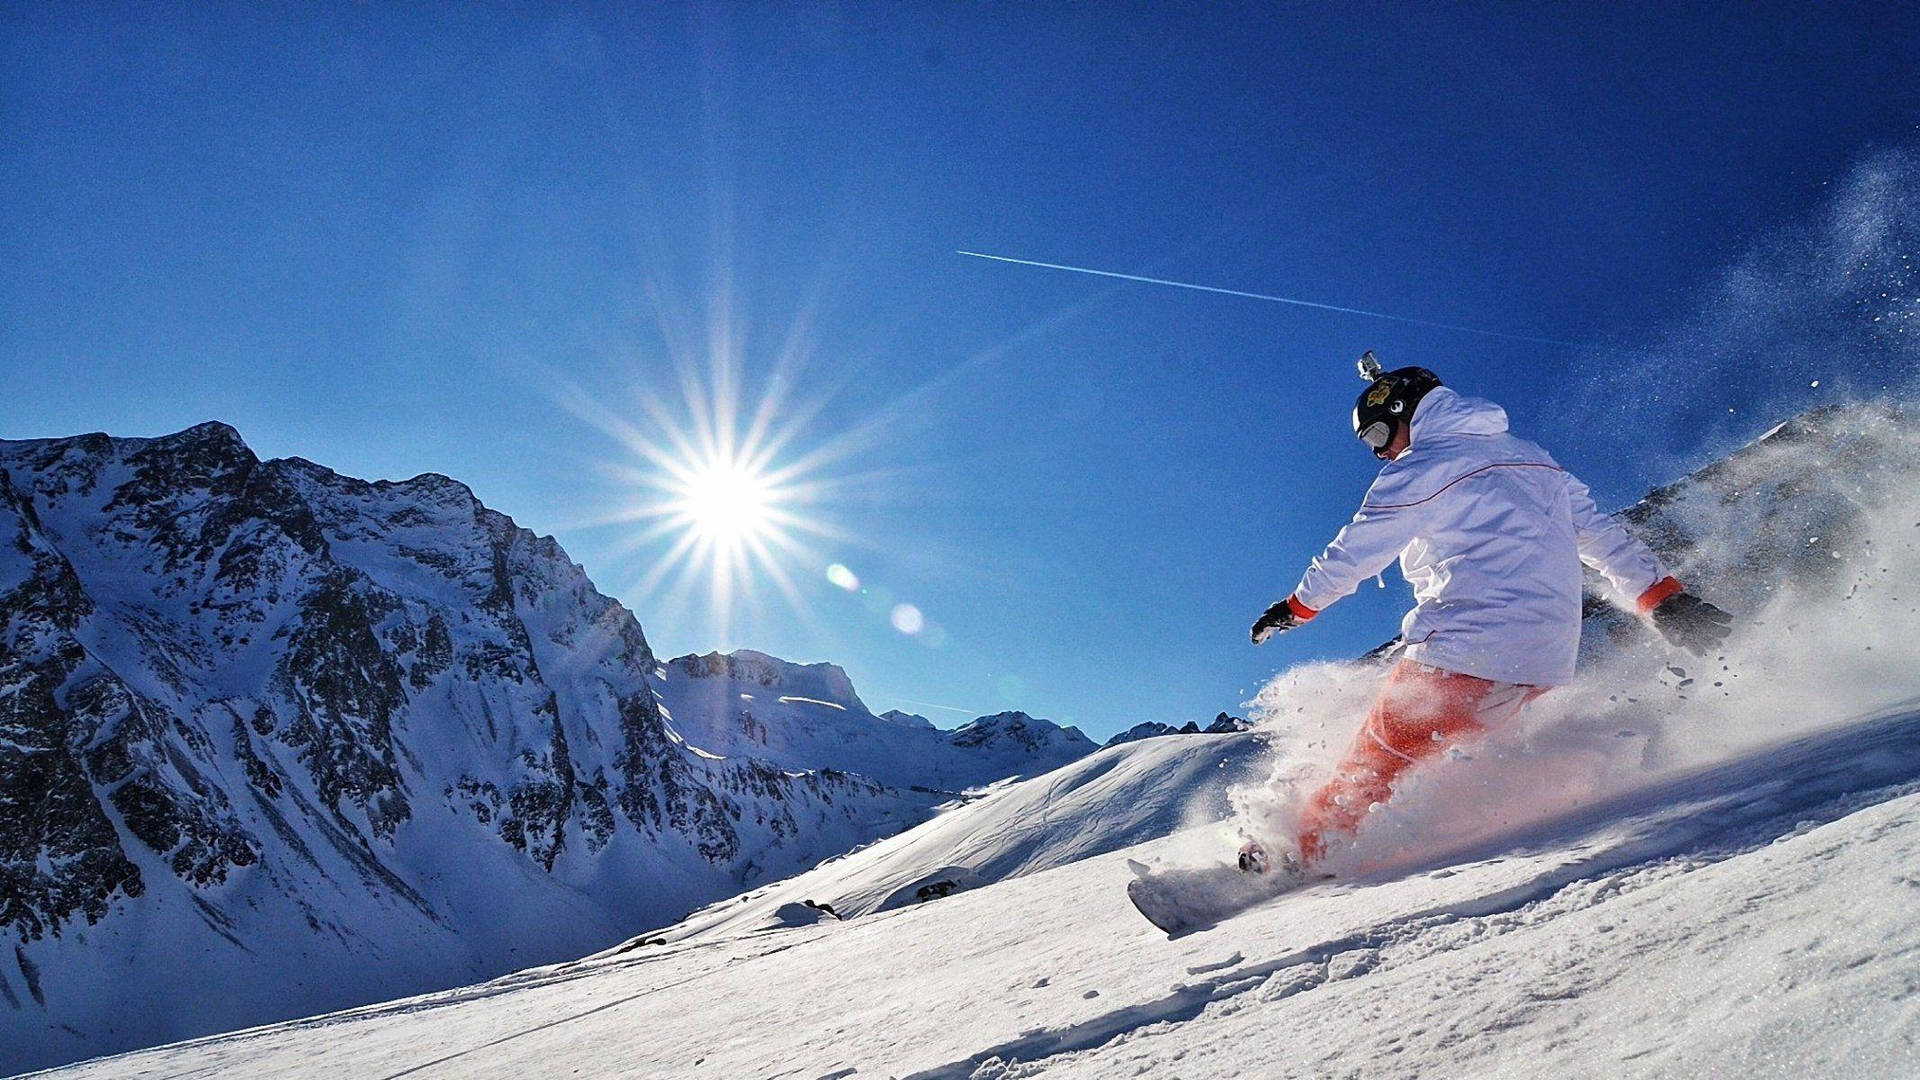 Gopro Snowboarder Going Downhill Background